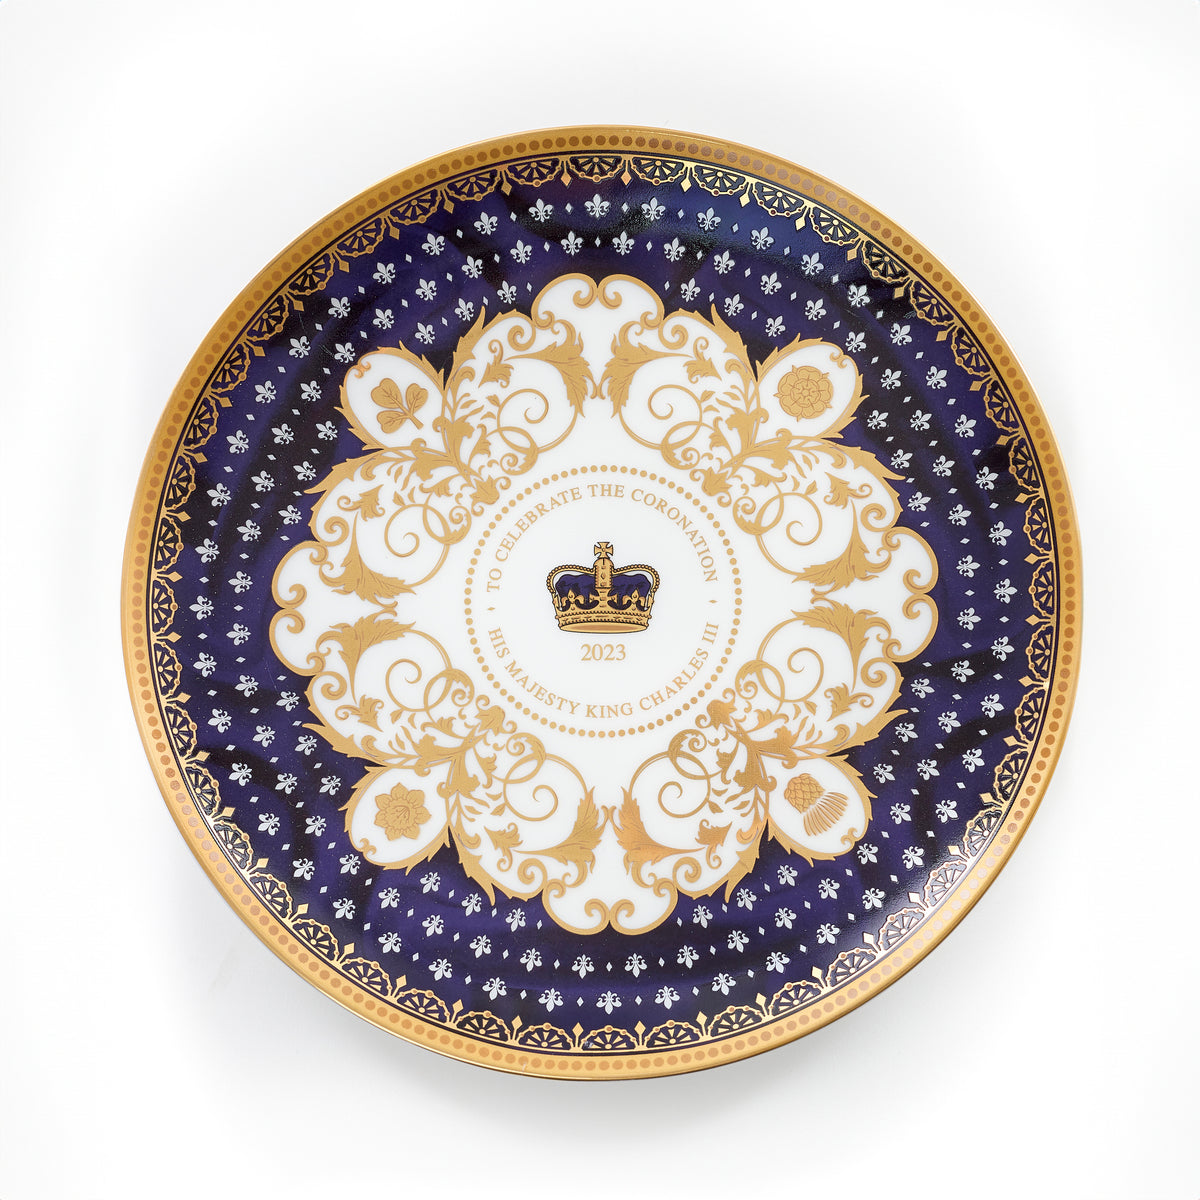 King Charles III Coronation Coupe Plate